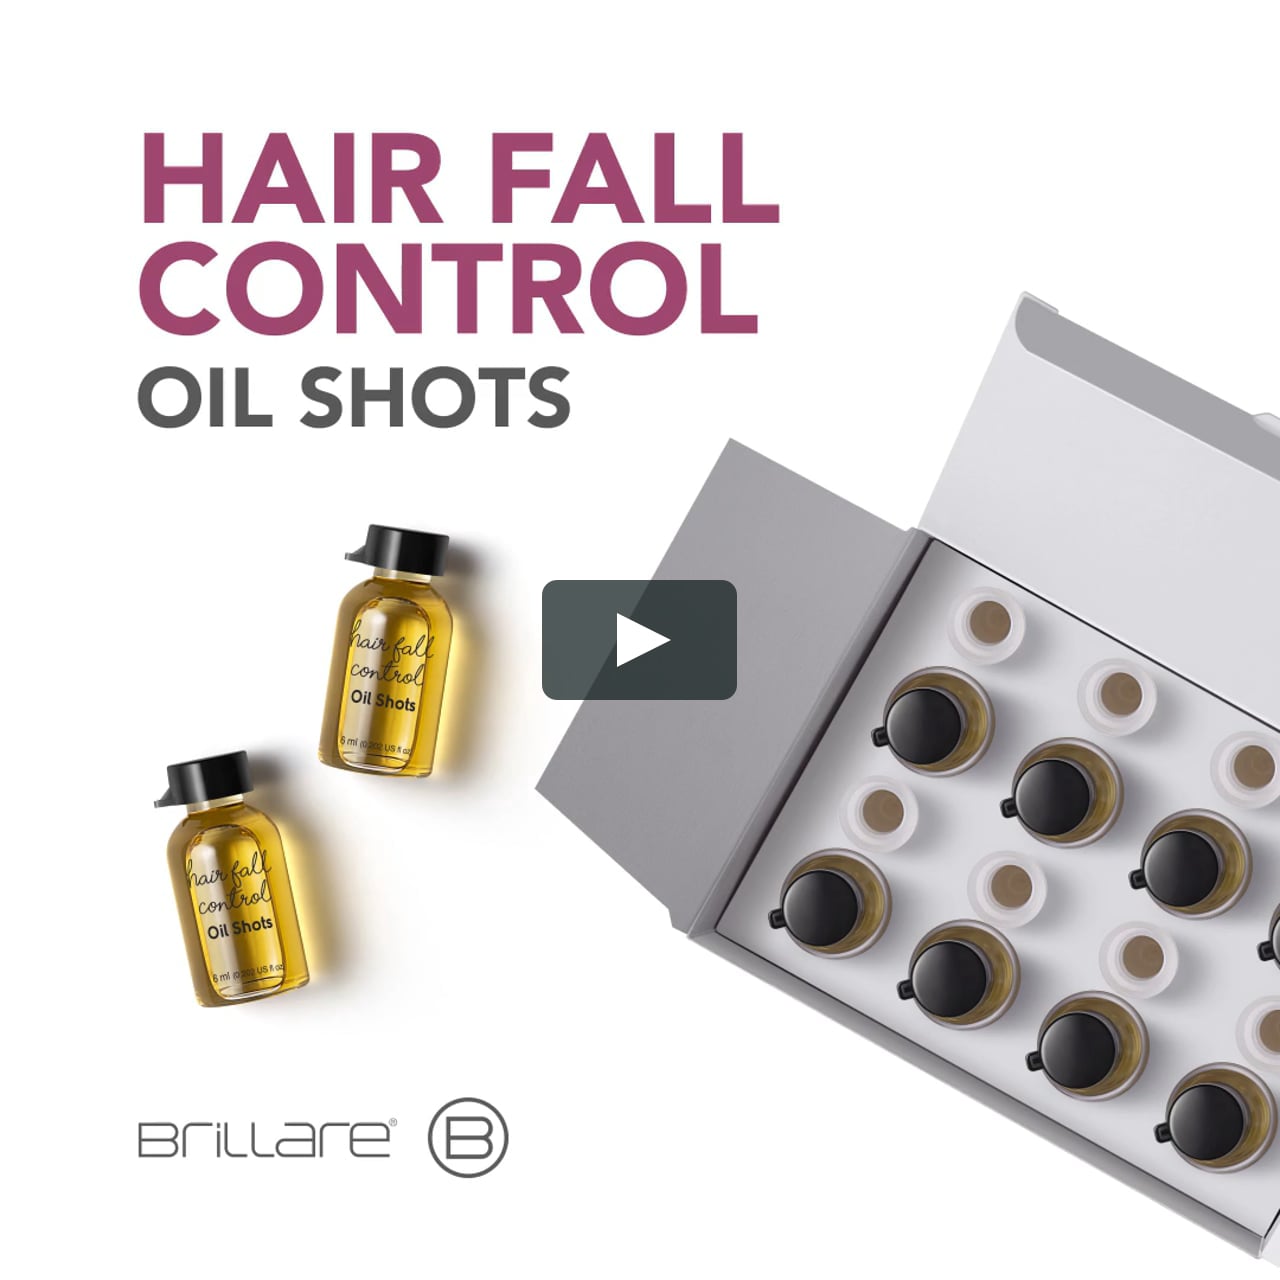 Oil shot - Hair Fall on Vimeo